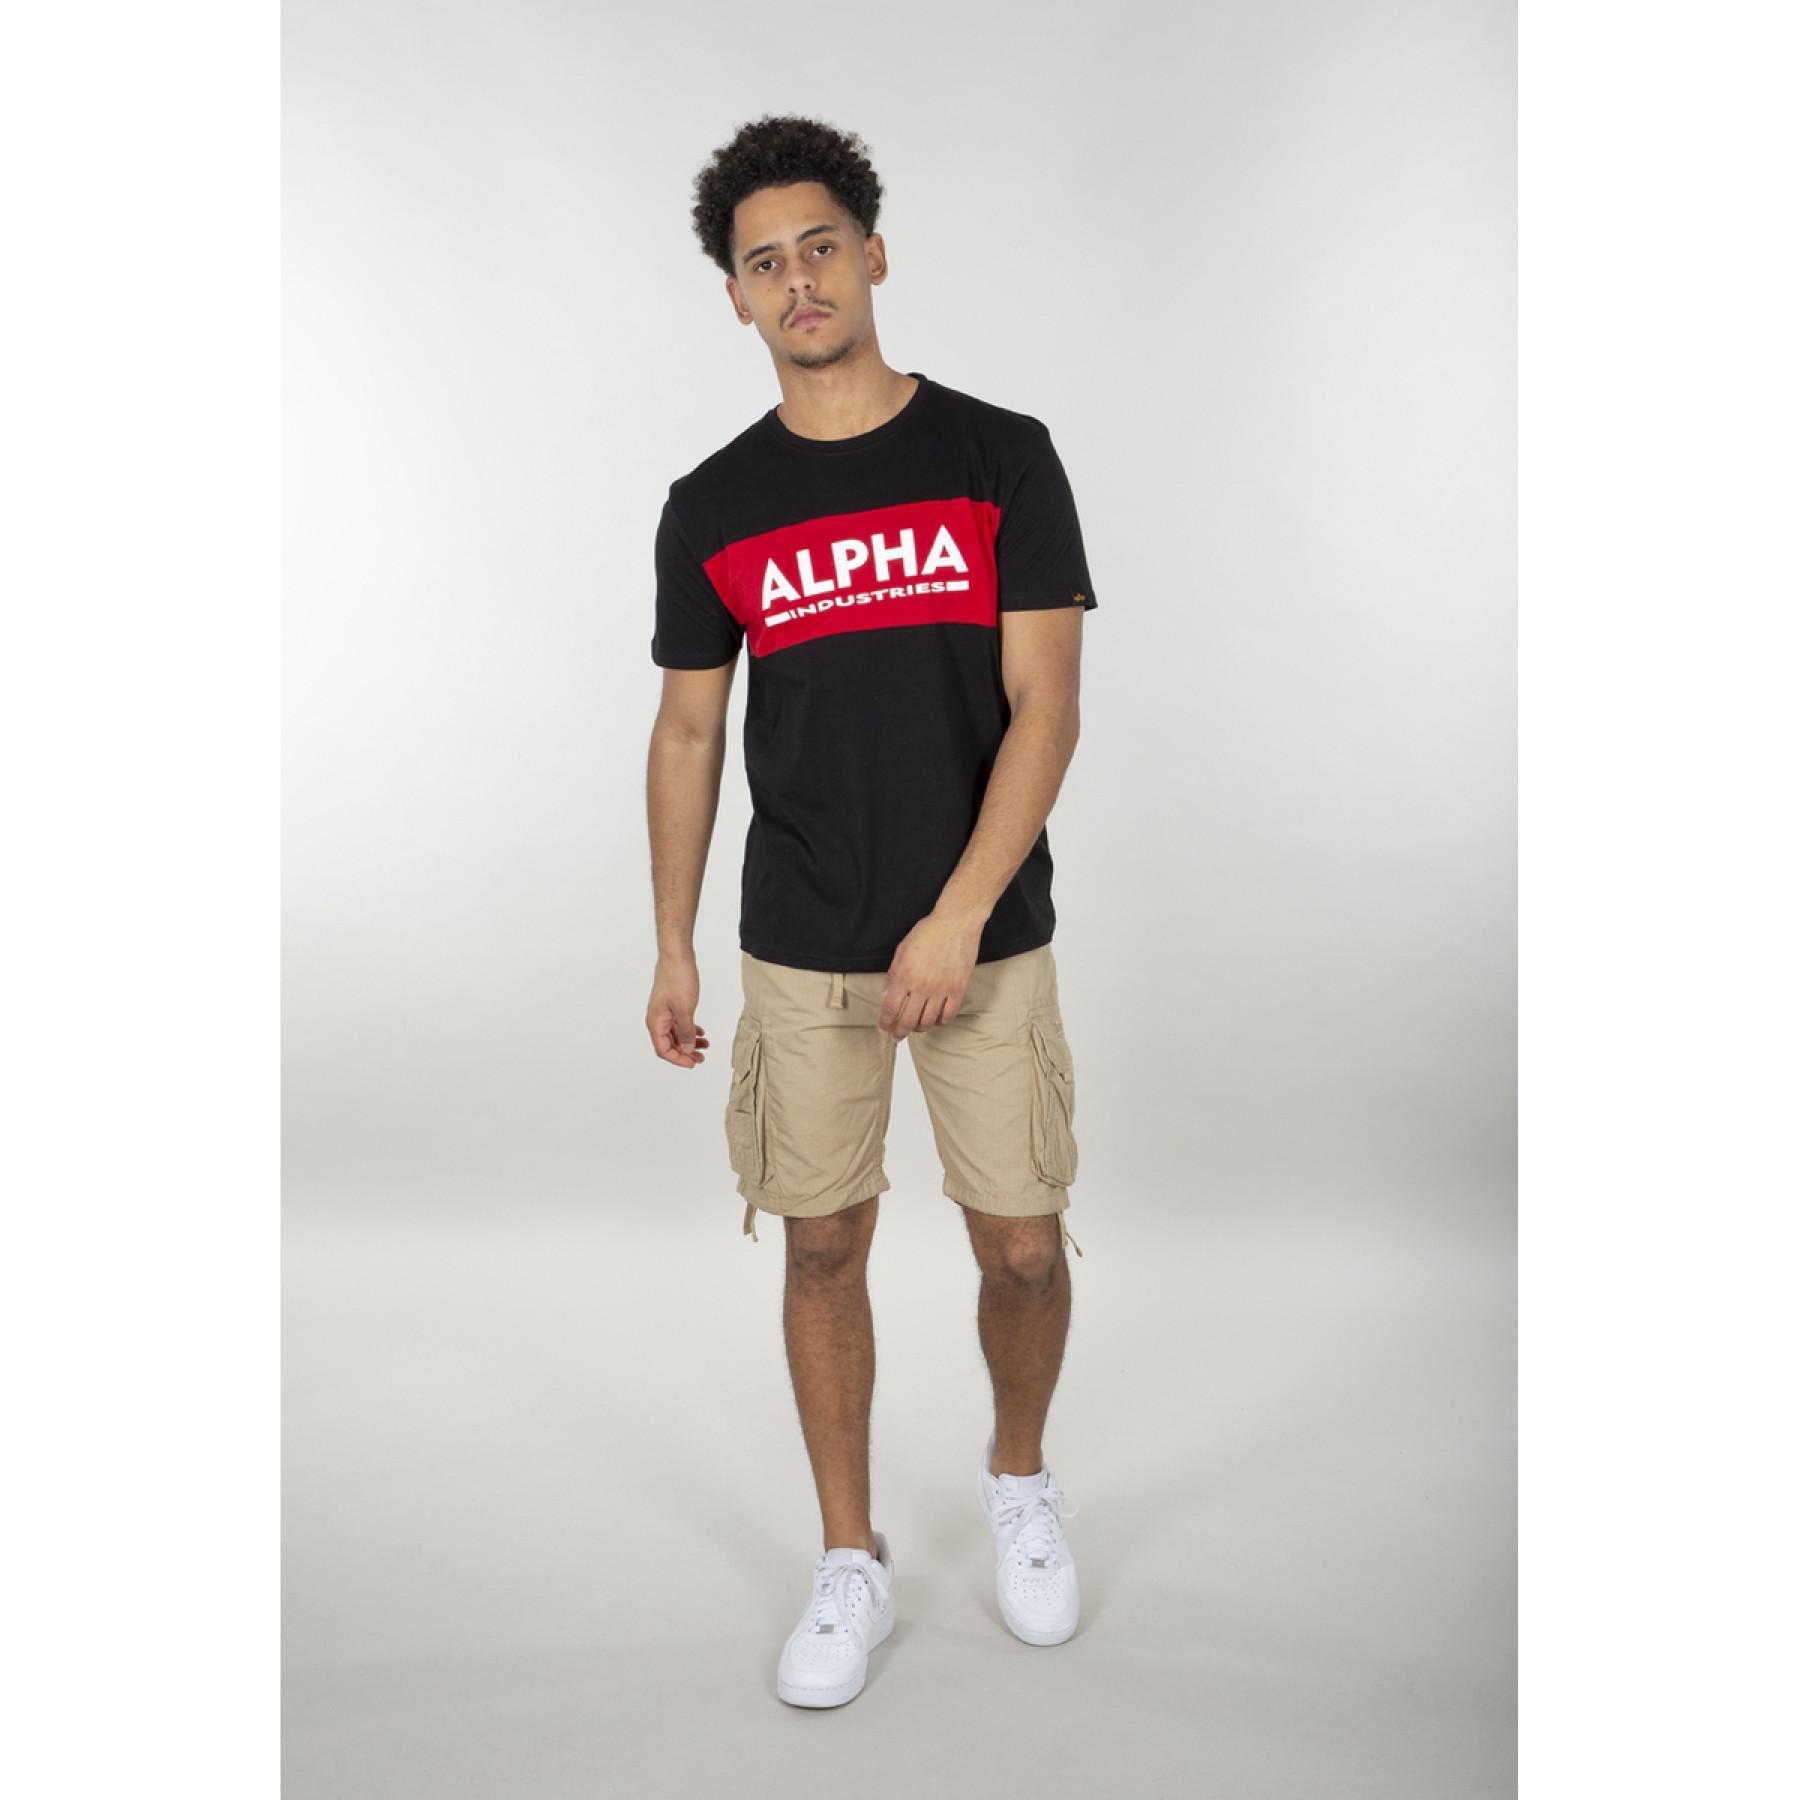 Polo shirts T-shirt Industries - - - T-shirts Alpha Men & Clothing Inlay